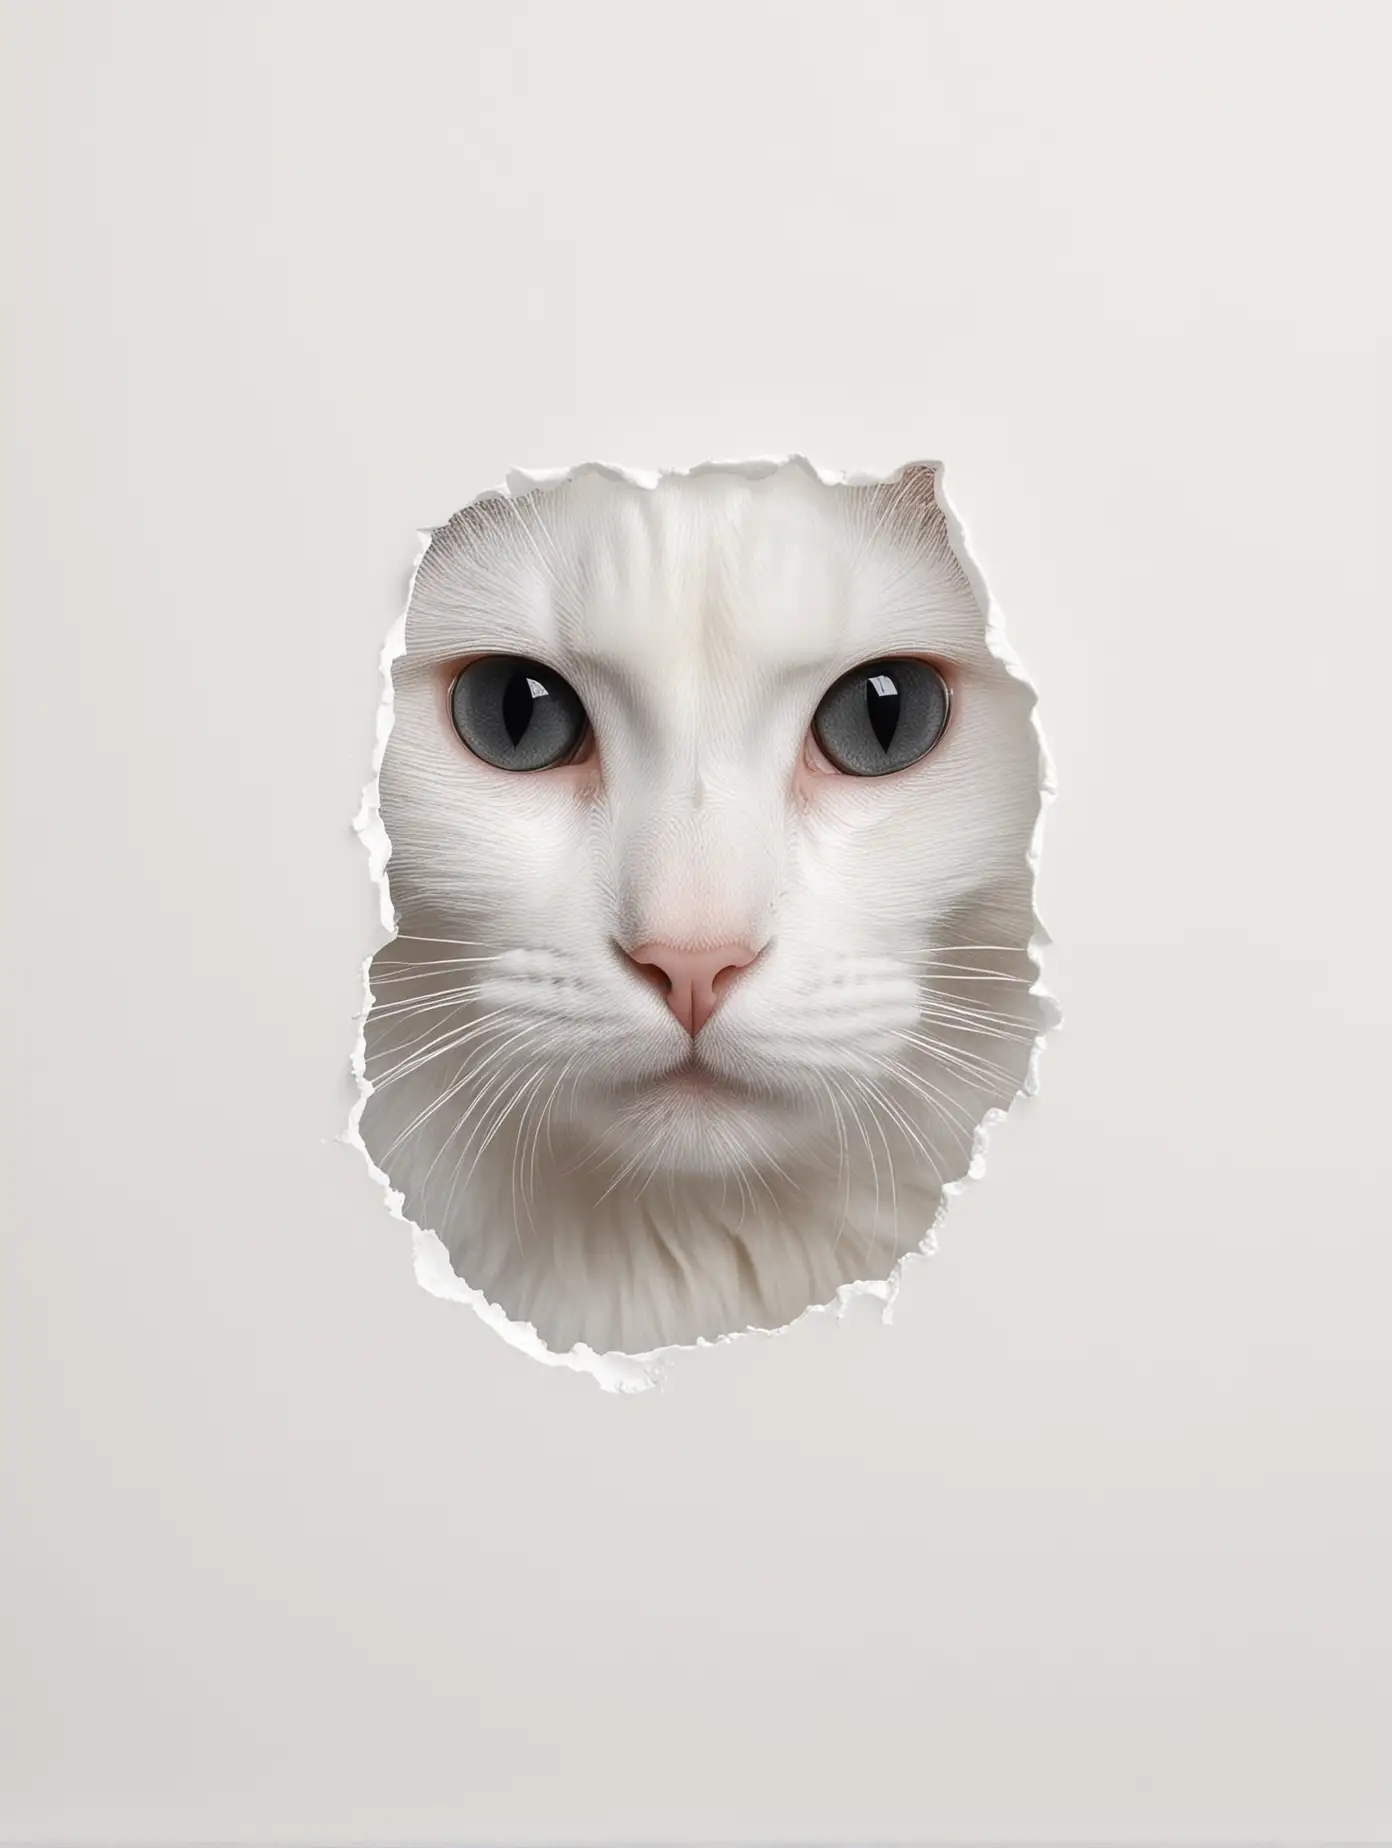 Curious White Cat Peeking Through Tear in Blank Backdrop